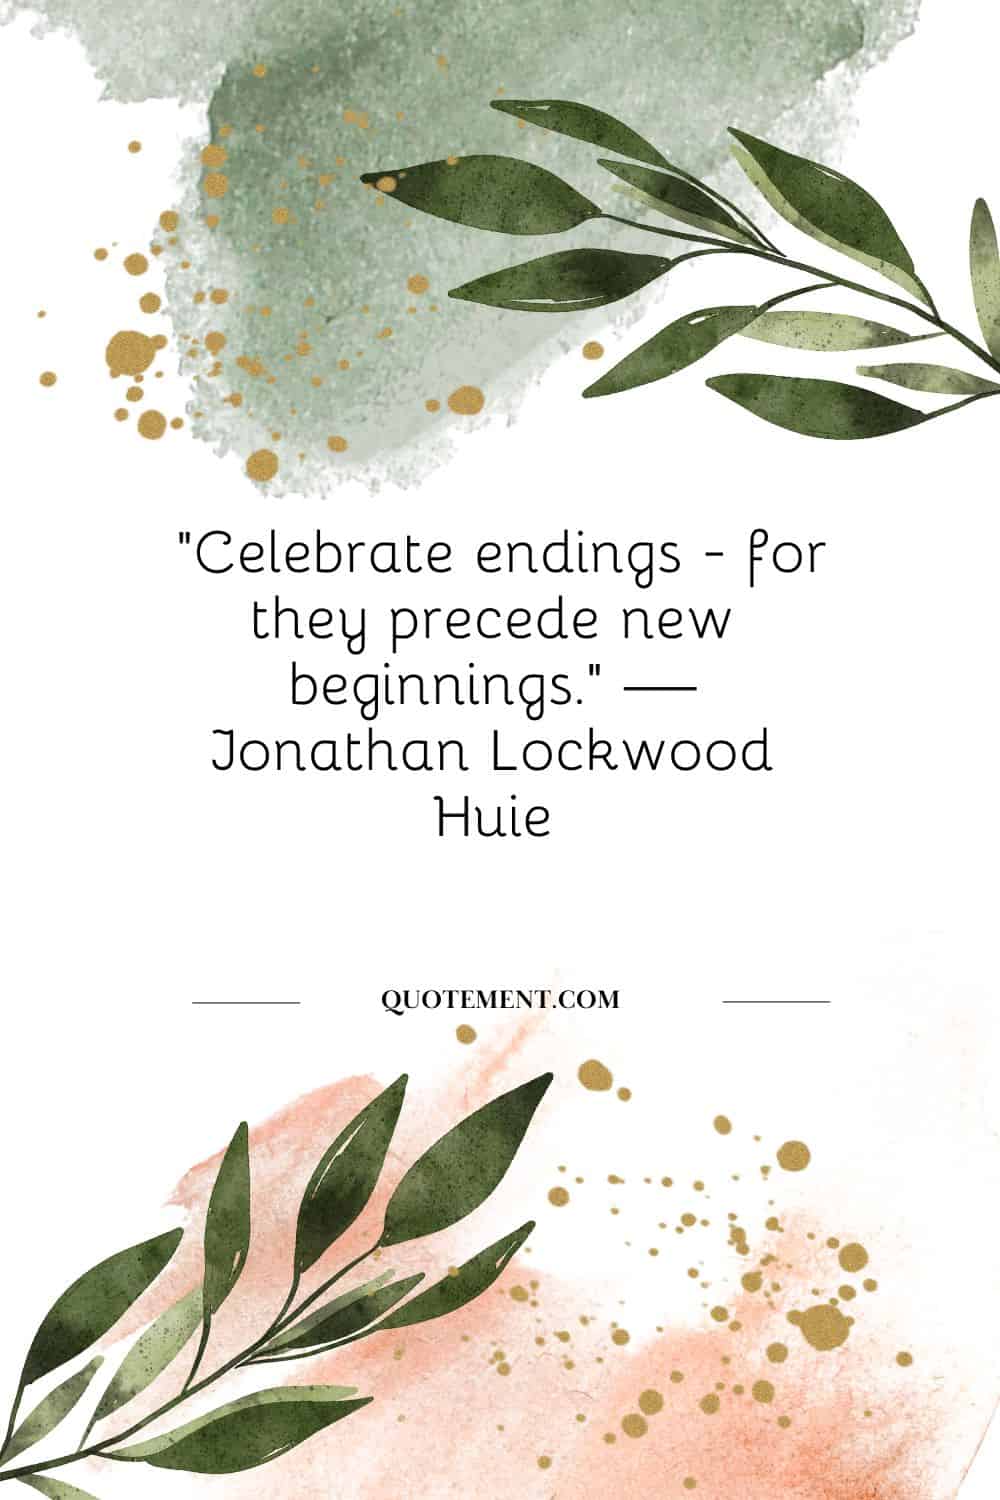 “Celebrate endings - for they precede new beginnings.” — Jonathan Lockwood Huie